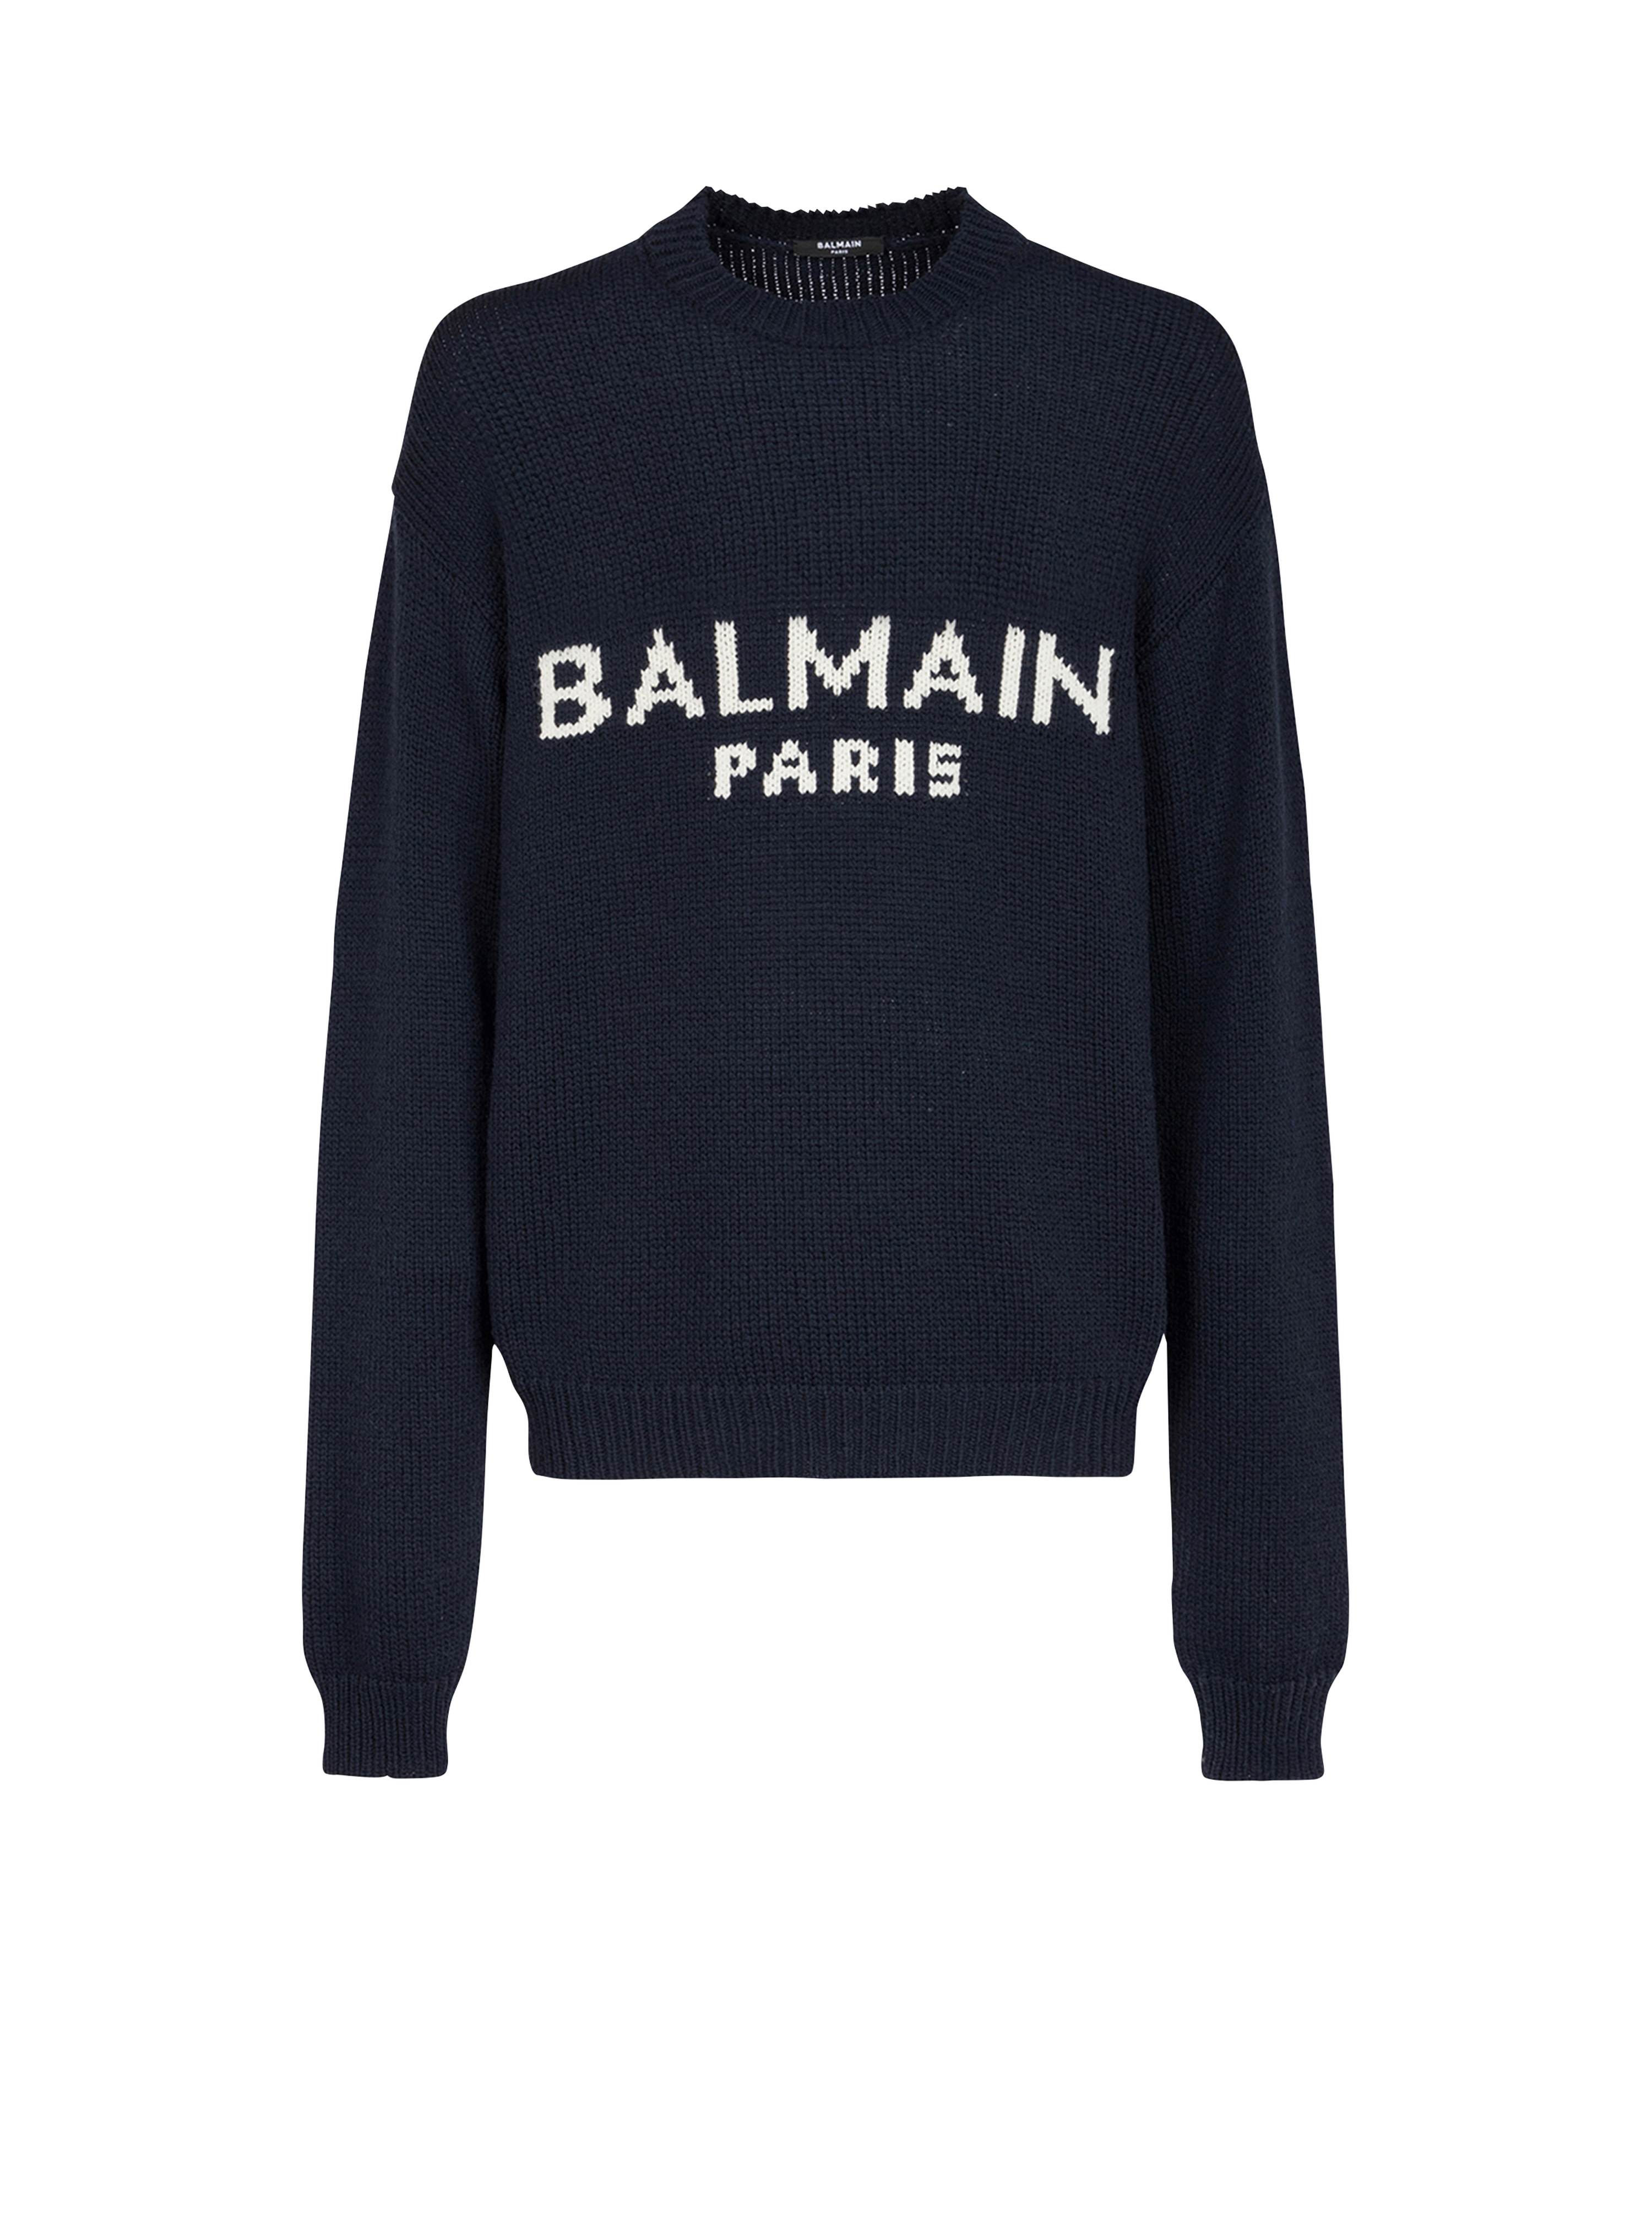 Balmain巴尔曼巴黎标志羊毛毛衣, black